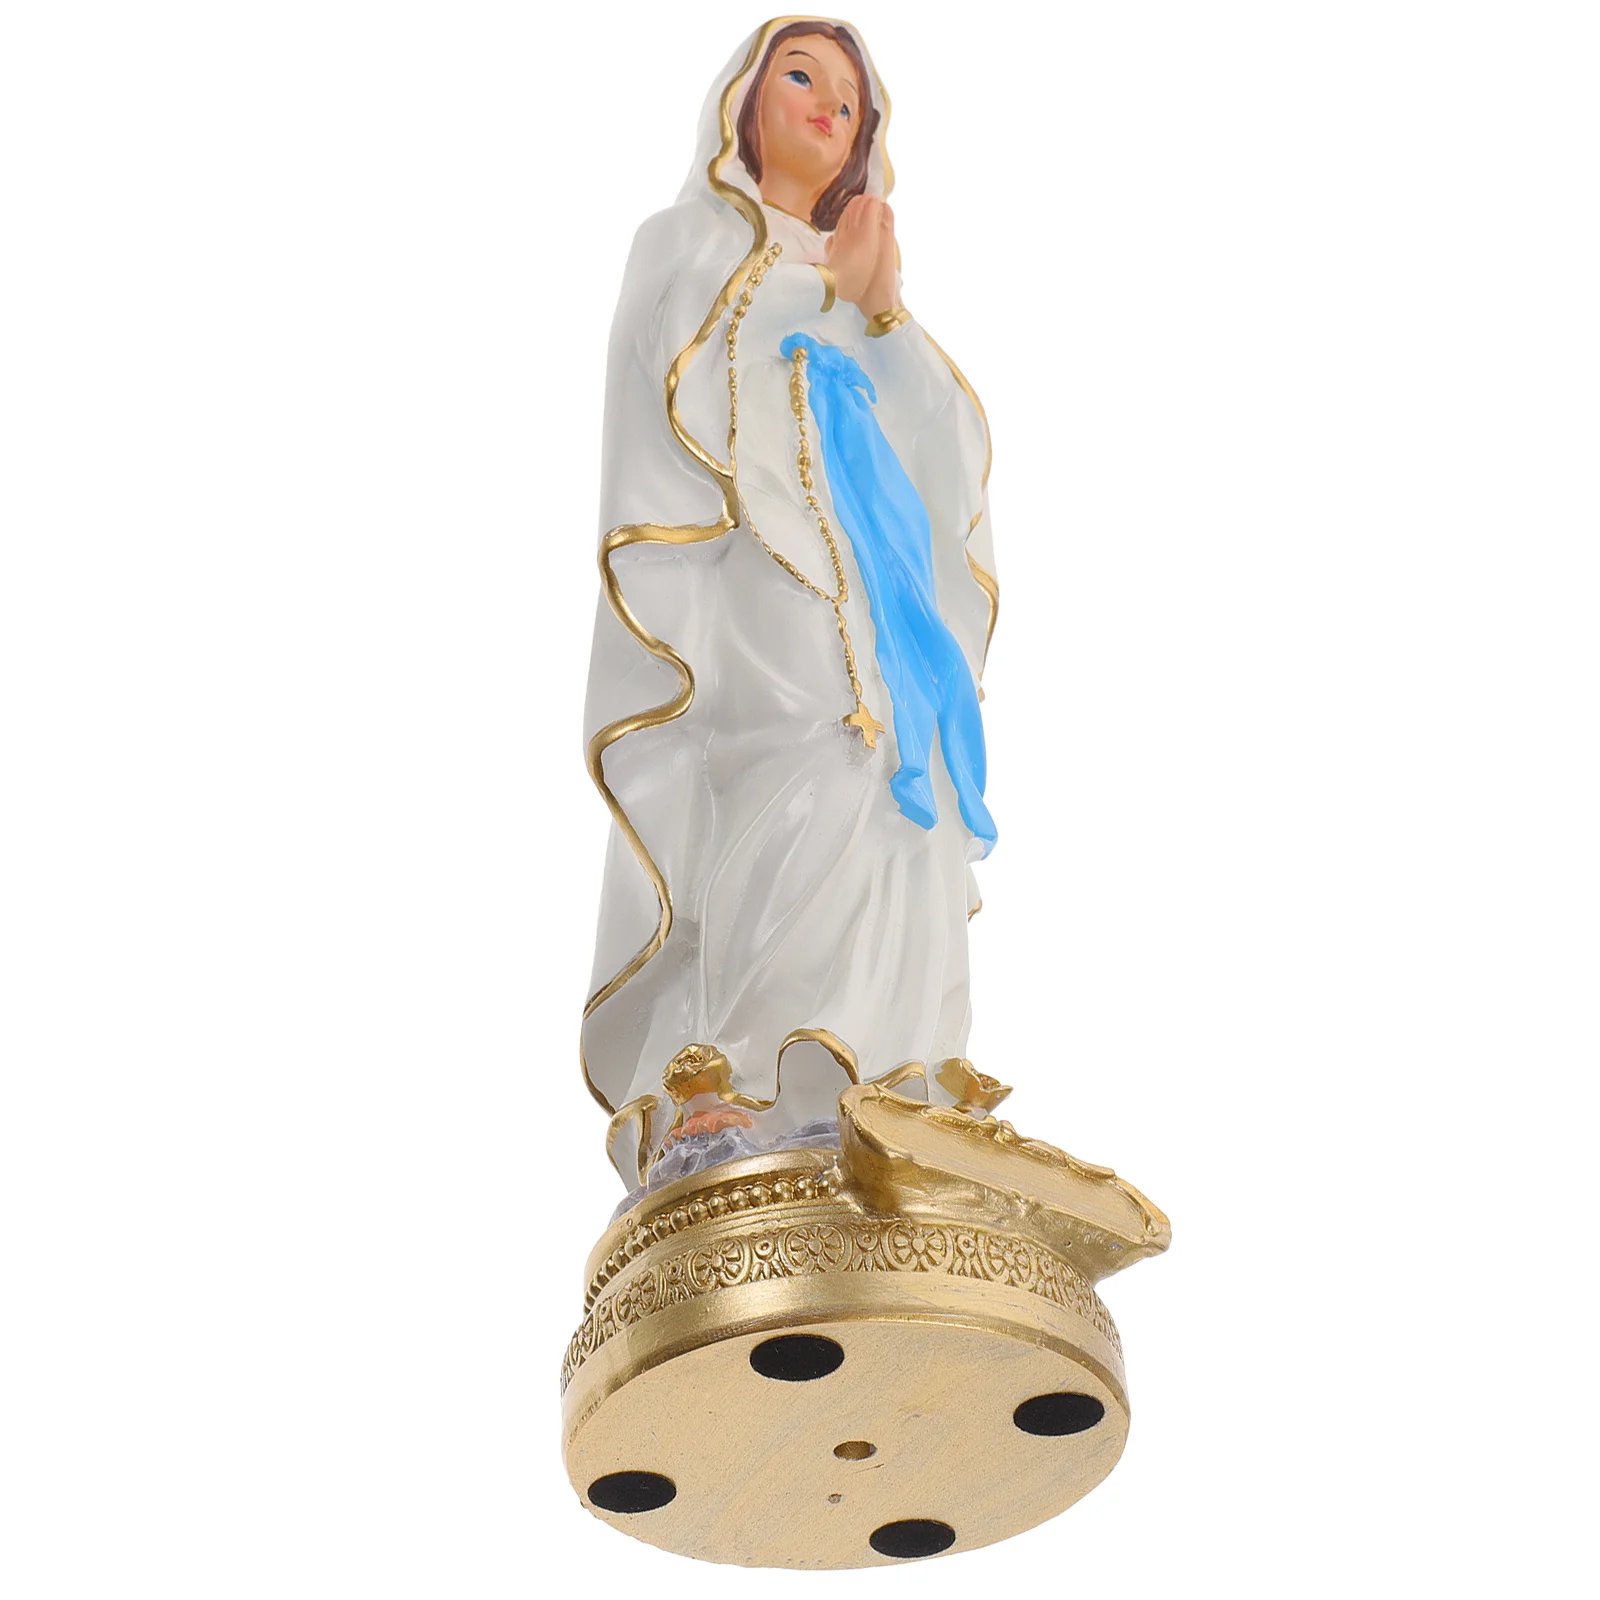 

Mary Virgin Statue Religious Statues Resin Figurine Catholic Mother Catholicism Desktop Ornament Decoration Madonna Adornment